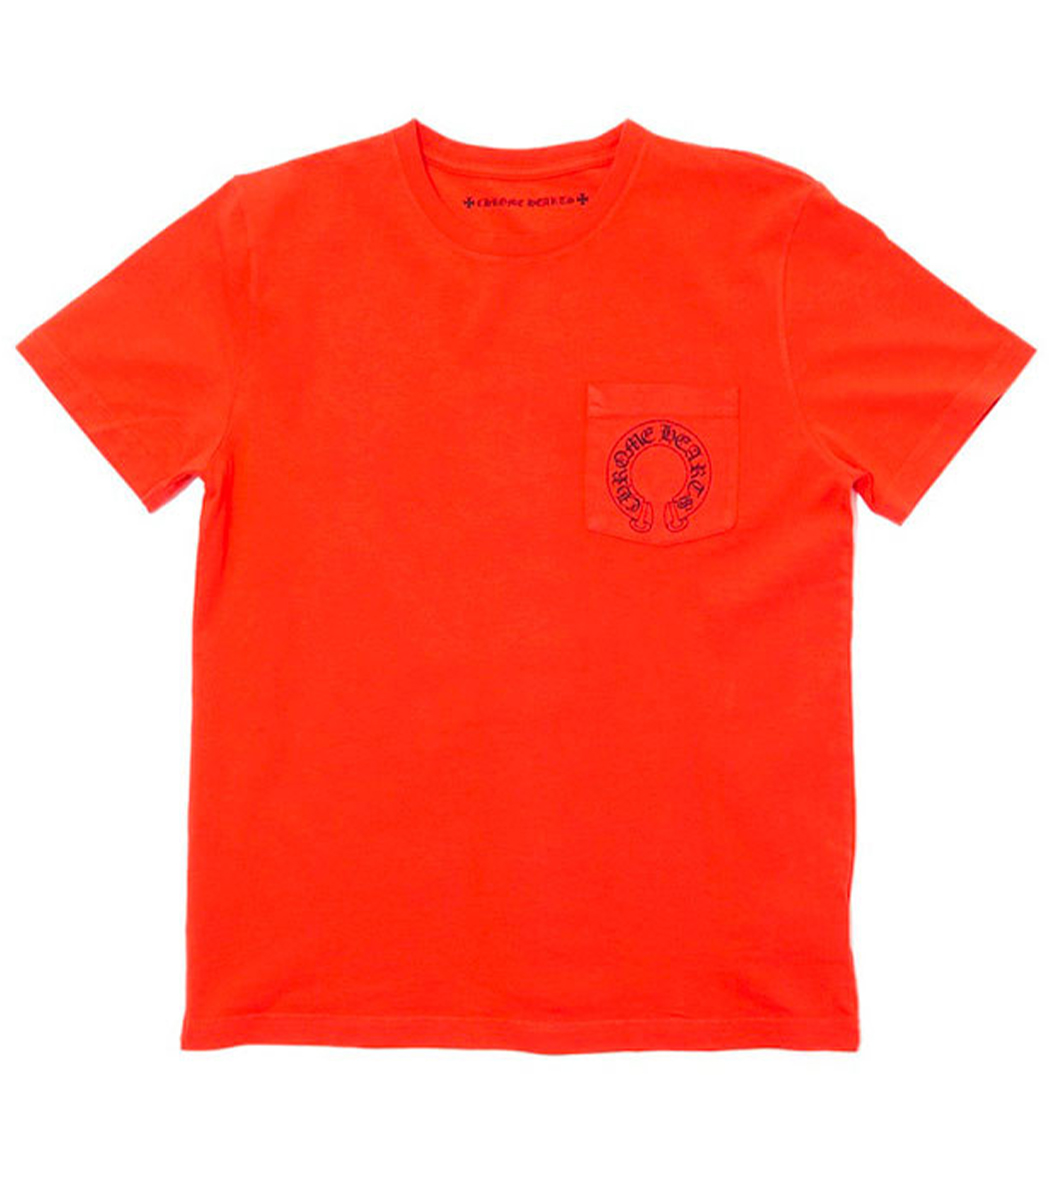 Chrome Hearts Matty Boy Call Me T-Shirt - Yellow/Orange - Upto 30% Off